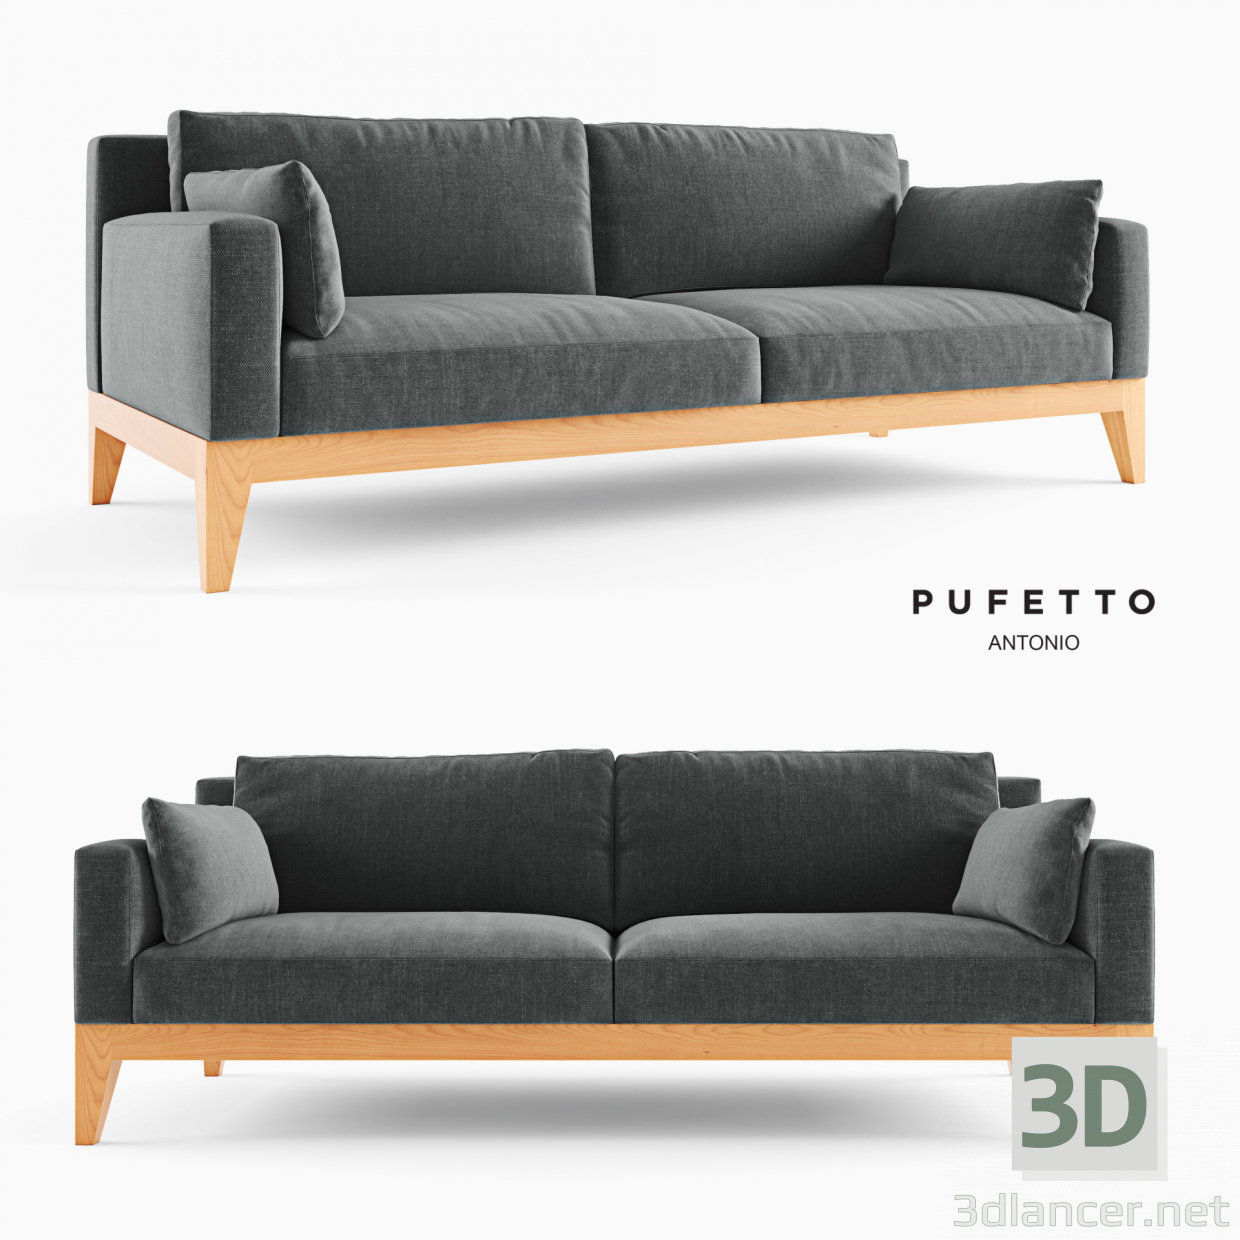 modello 3D divano moderno - anteprima